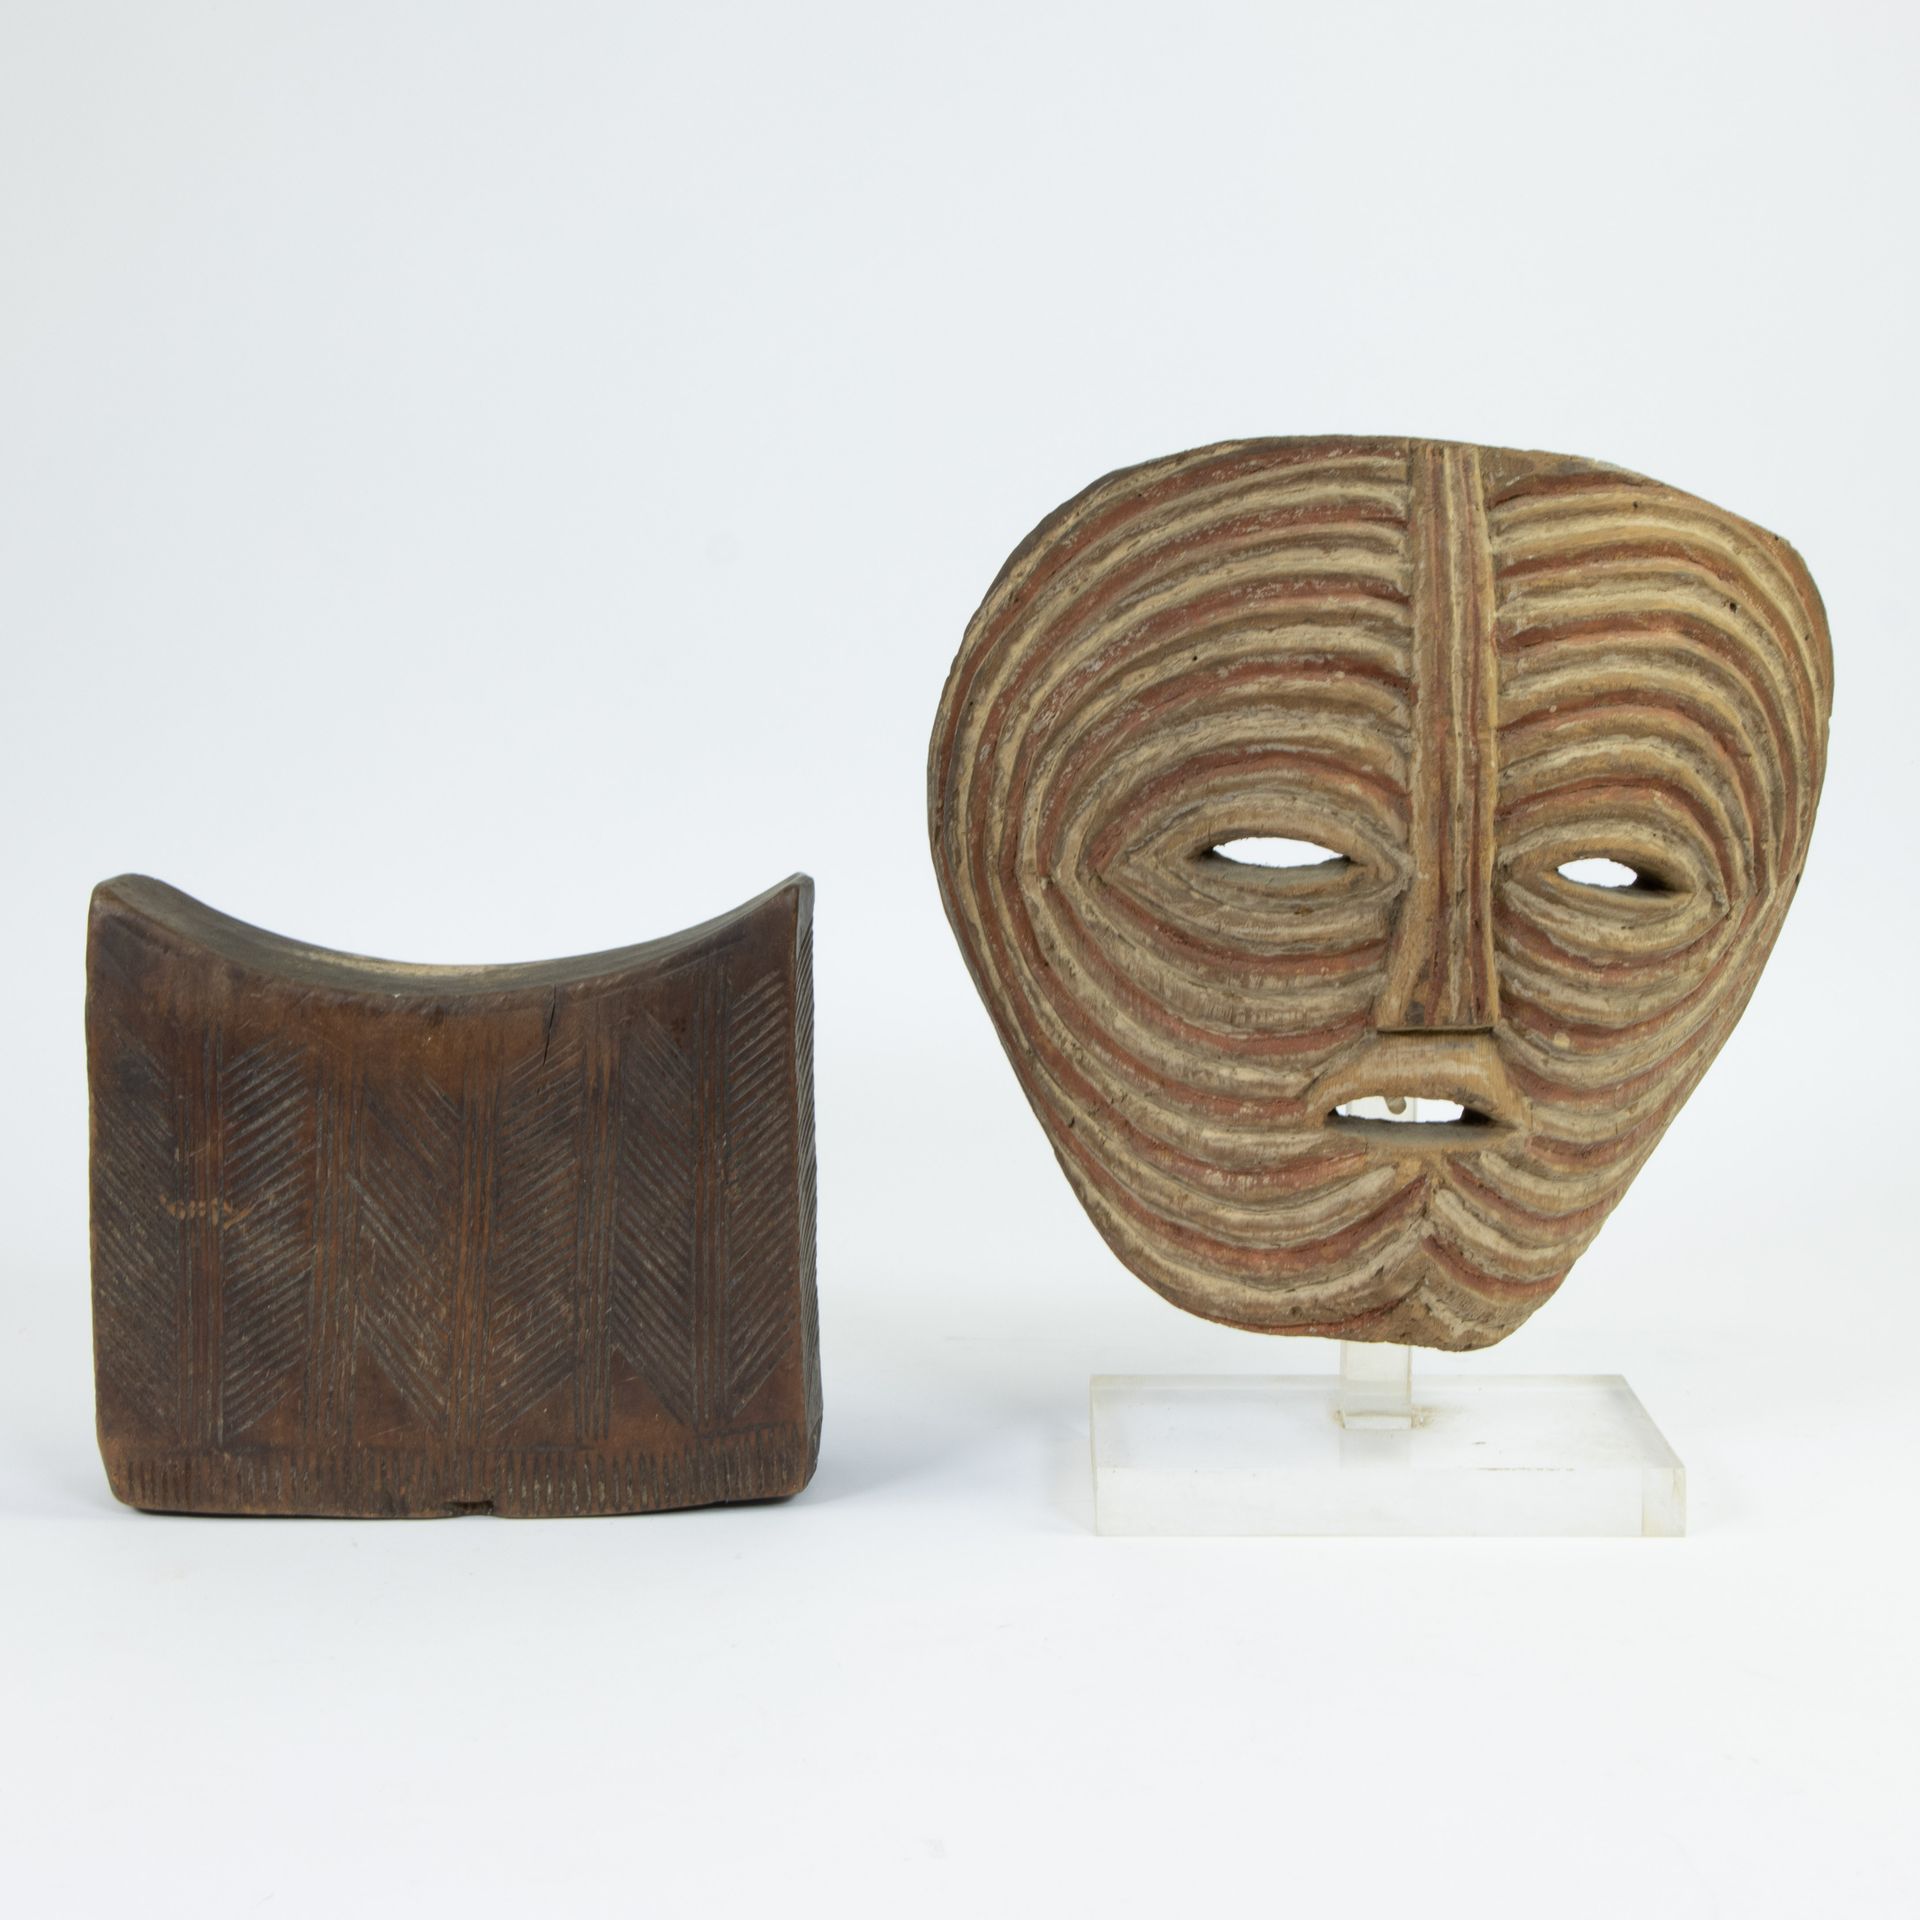 Null 非洲面具和颈托
南非面具和颈托
18 x 20.5 x 8和25.5 x 26 x 10厘米